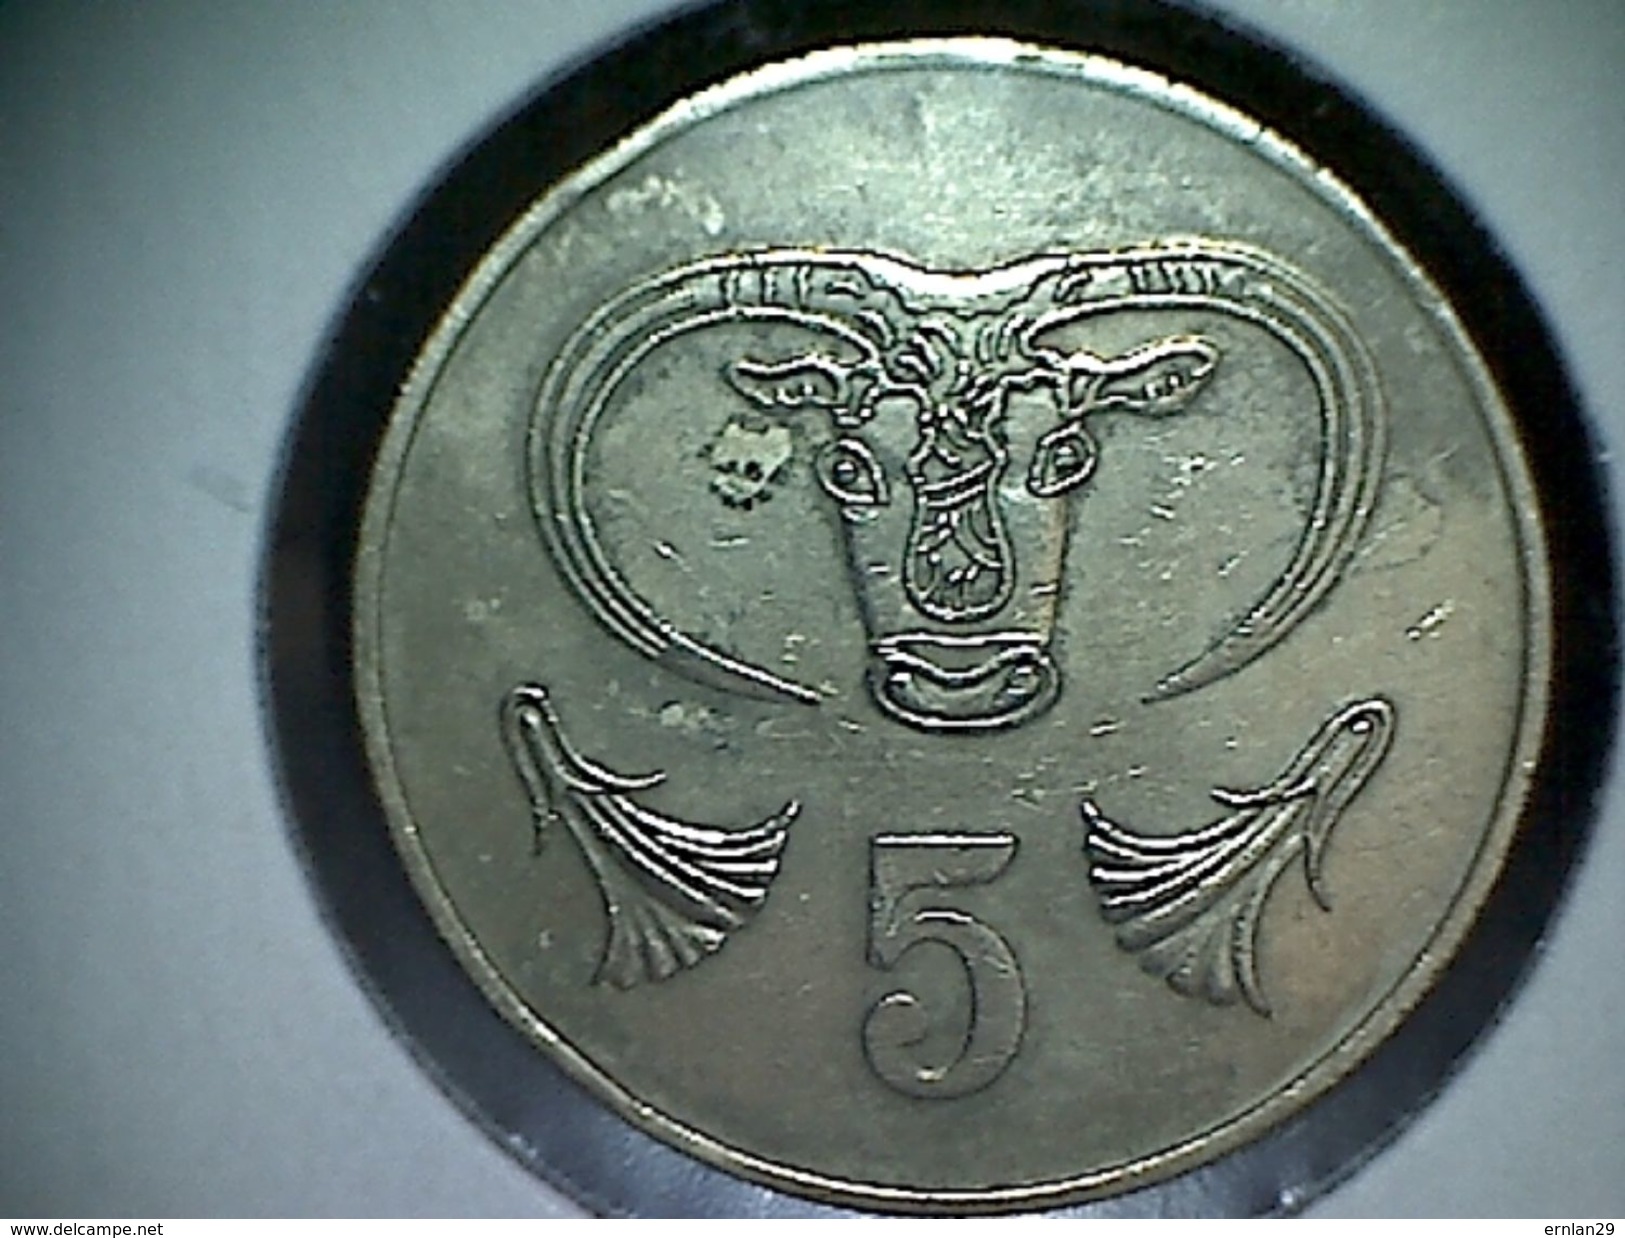 Chypre 5 Cents 1983 - Chypre